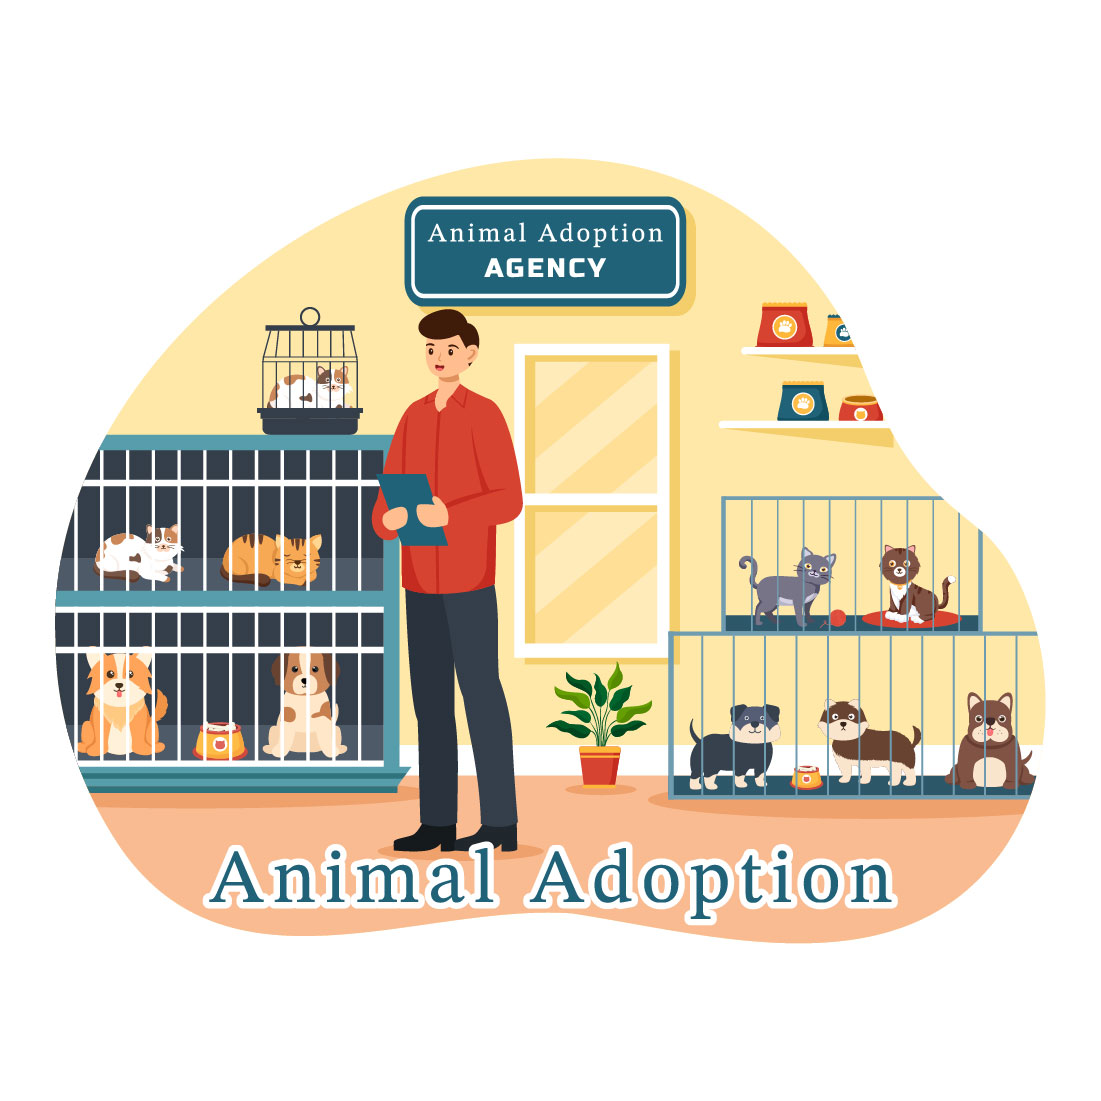 9 Animal Adoption Agency Illustration preview image.